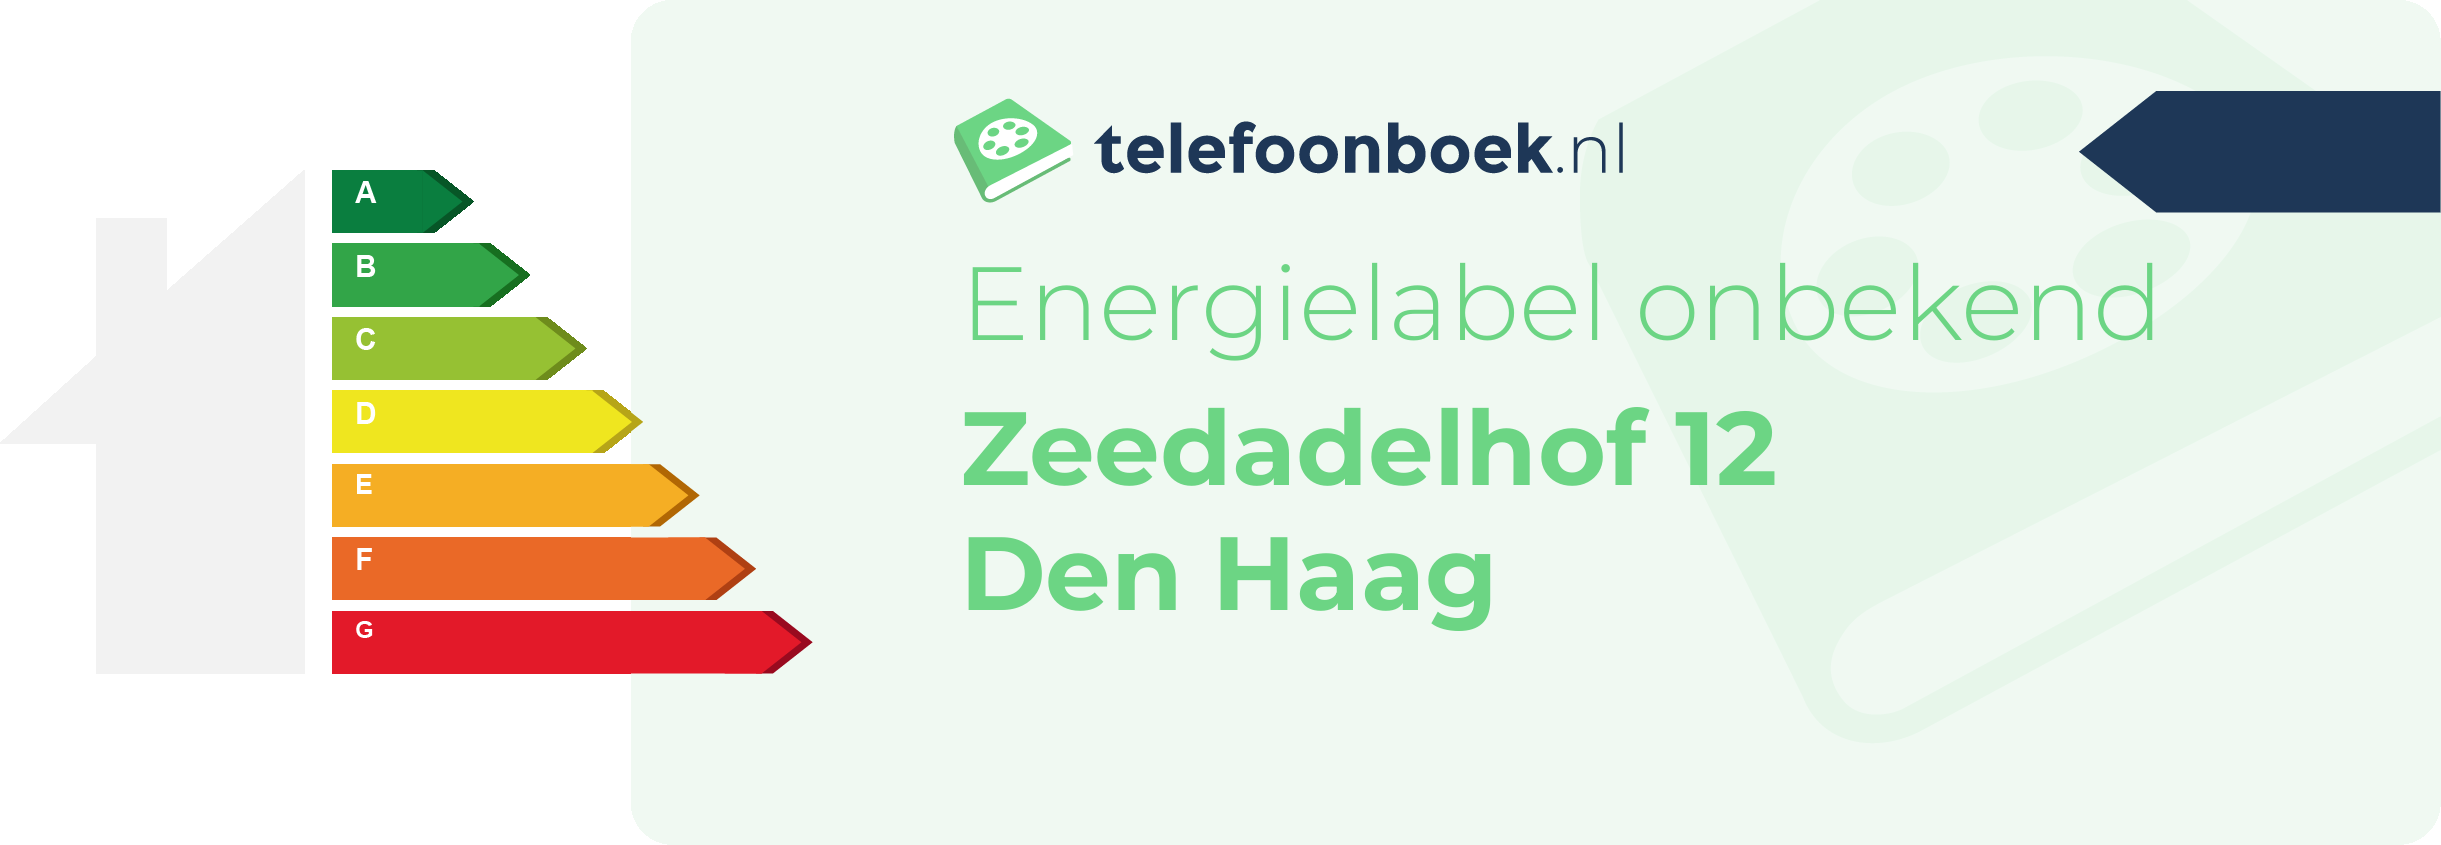 Energielabel Zeedadelhof 12 Den Haag